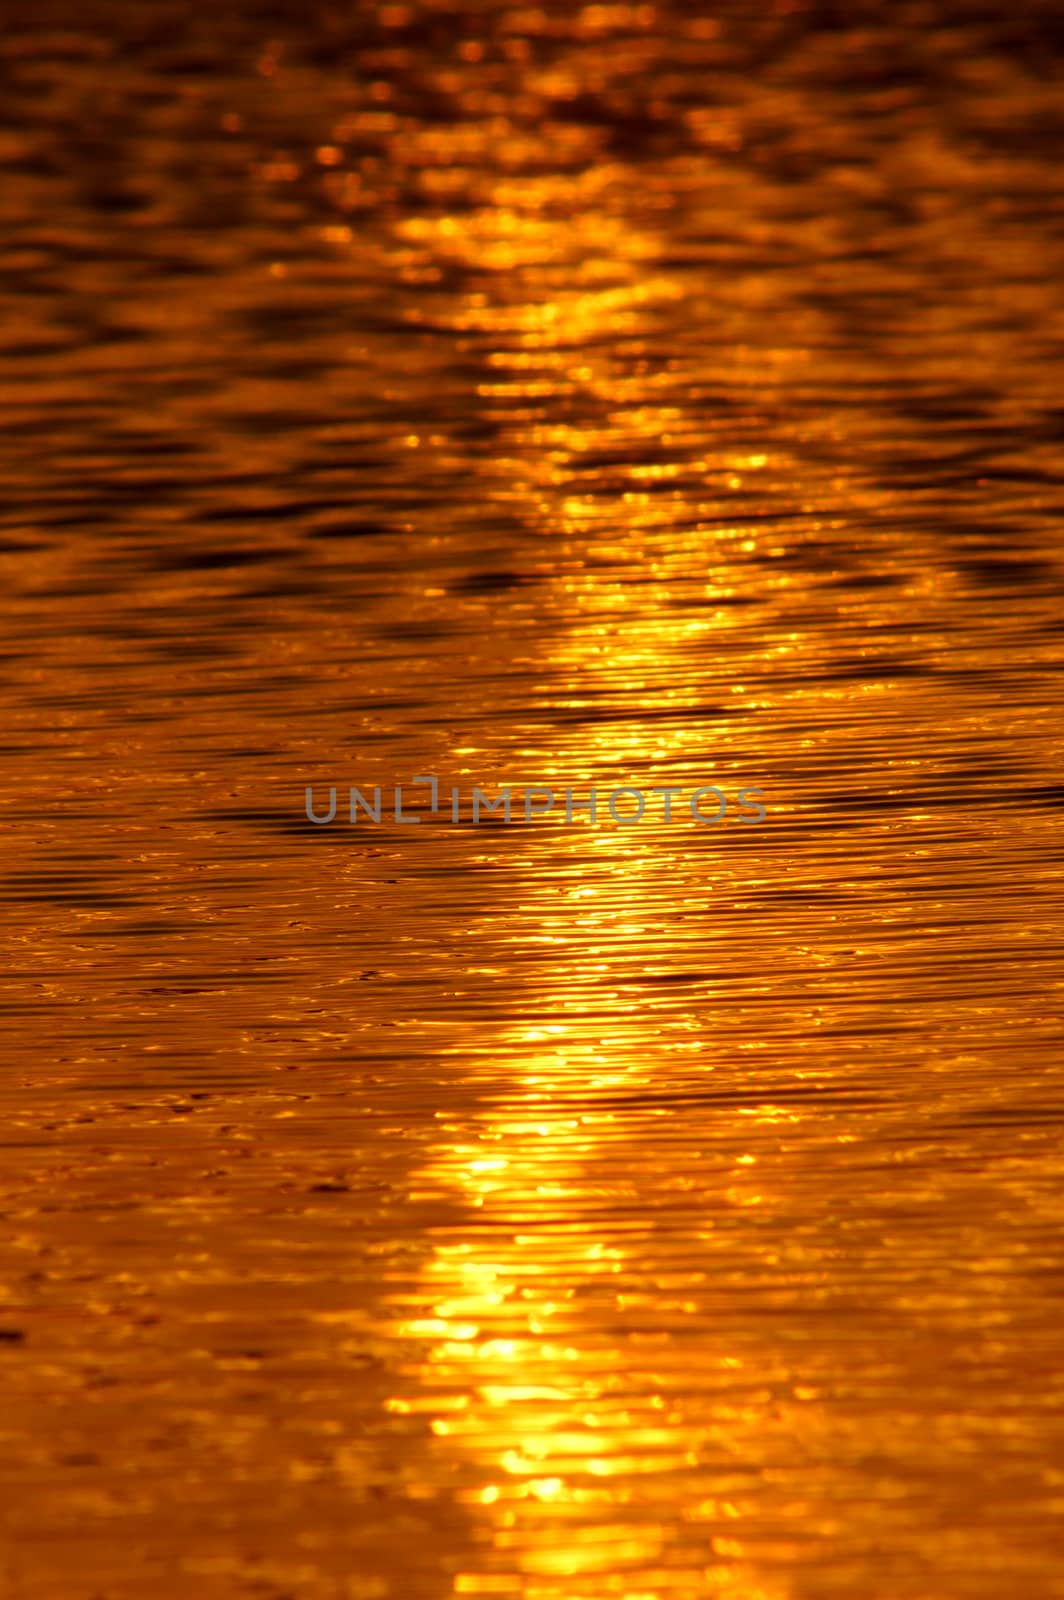 Reflection of sunset on the lake.